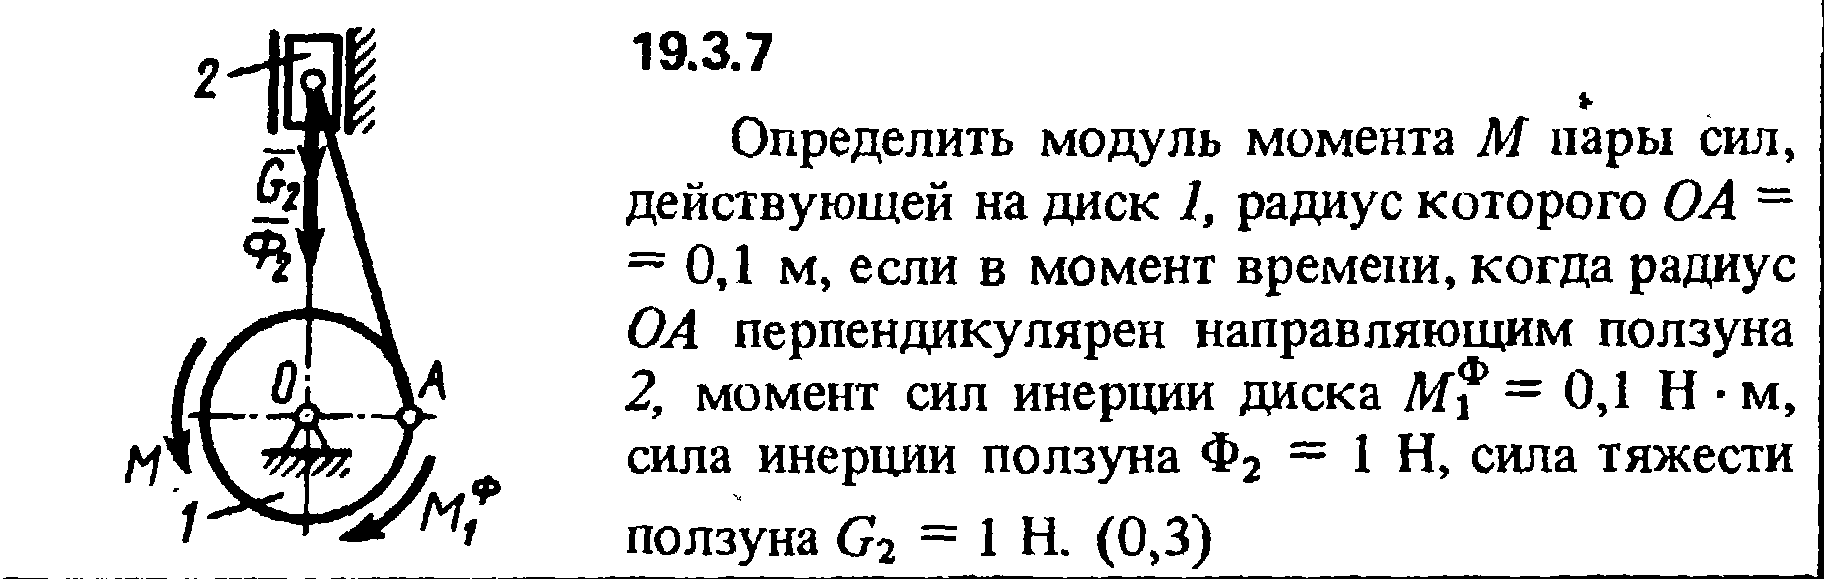 Решение 19.3.7 из сборника (решебника) Кепе О.Е. 1989